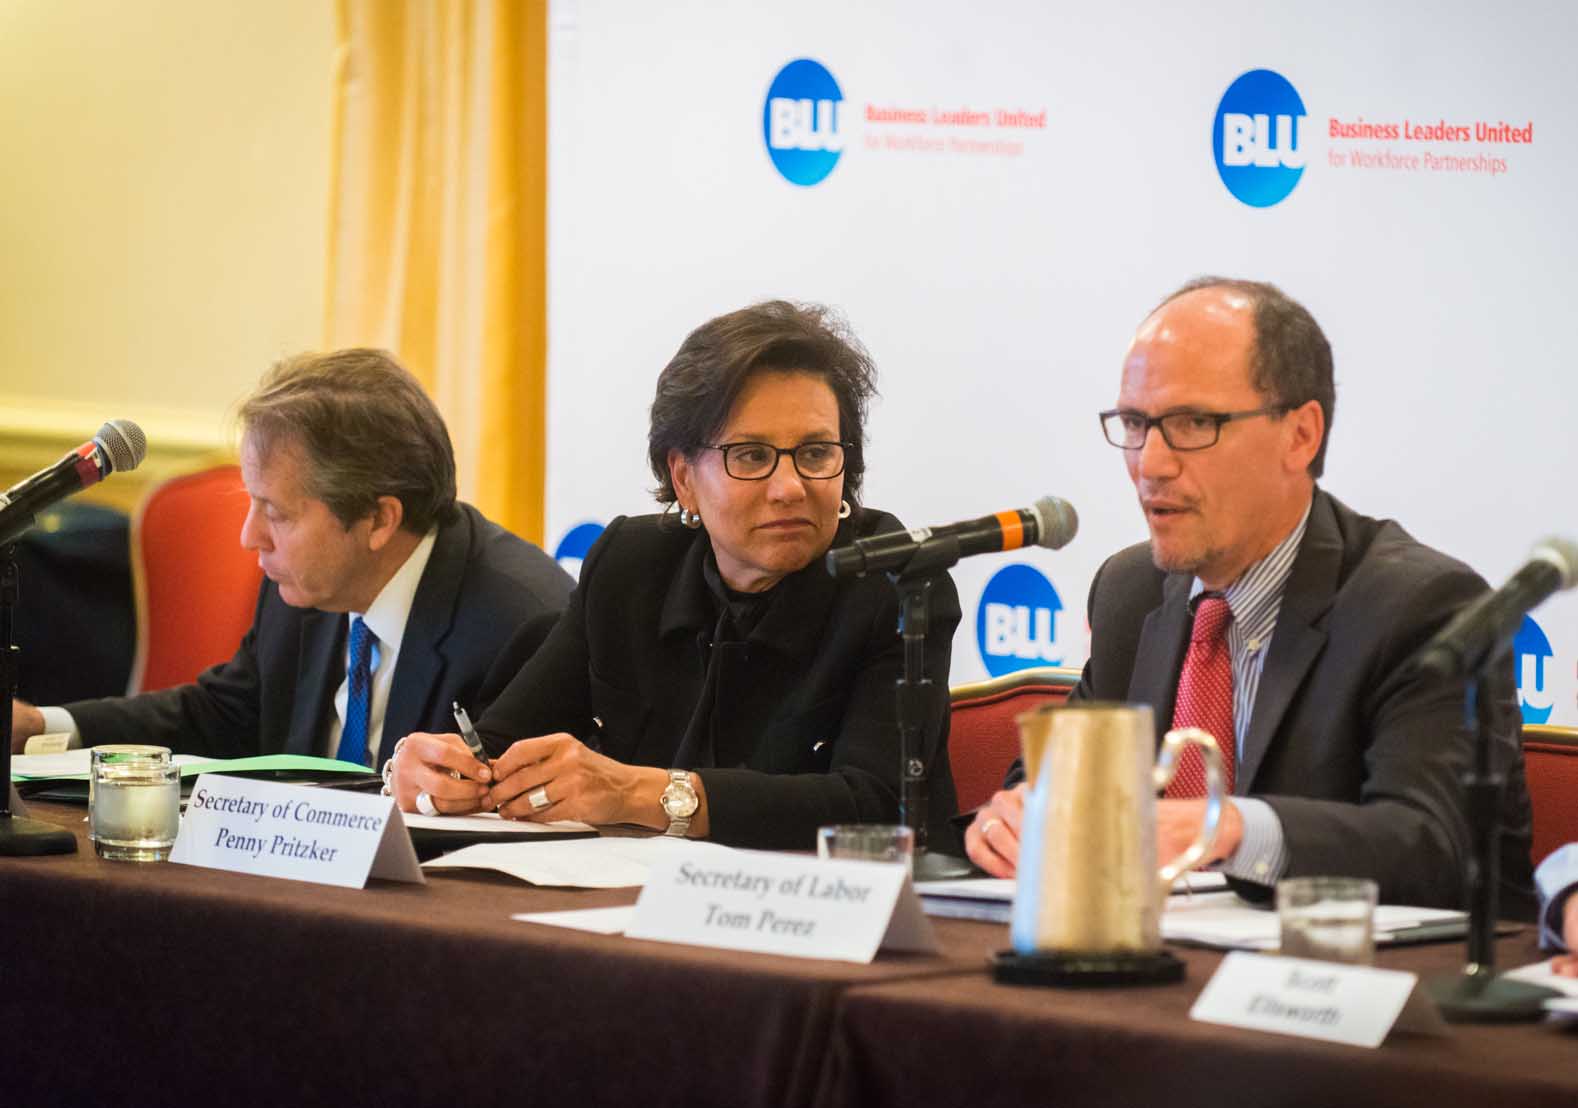 Secretary of Commerce Penny Pritzker and Secretary of Labor Tom Perez Discuss Skills Gap with BLU